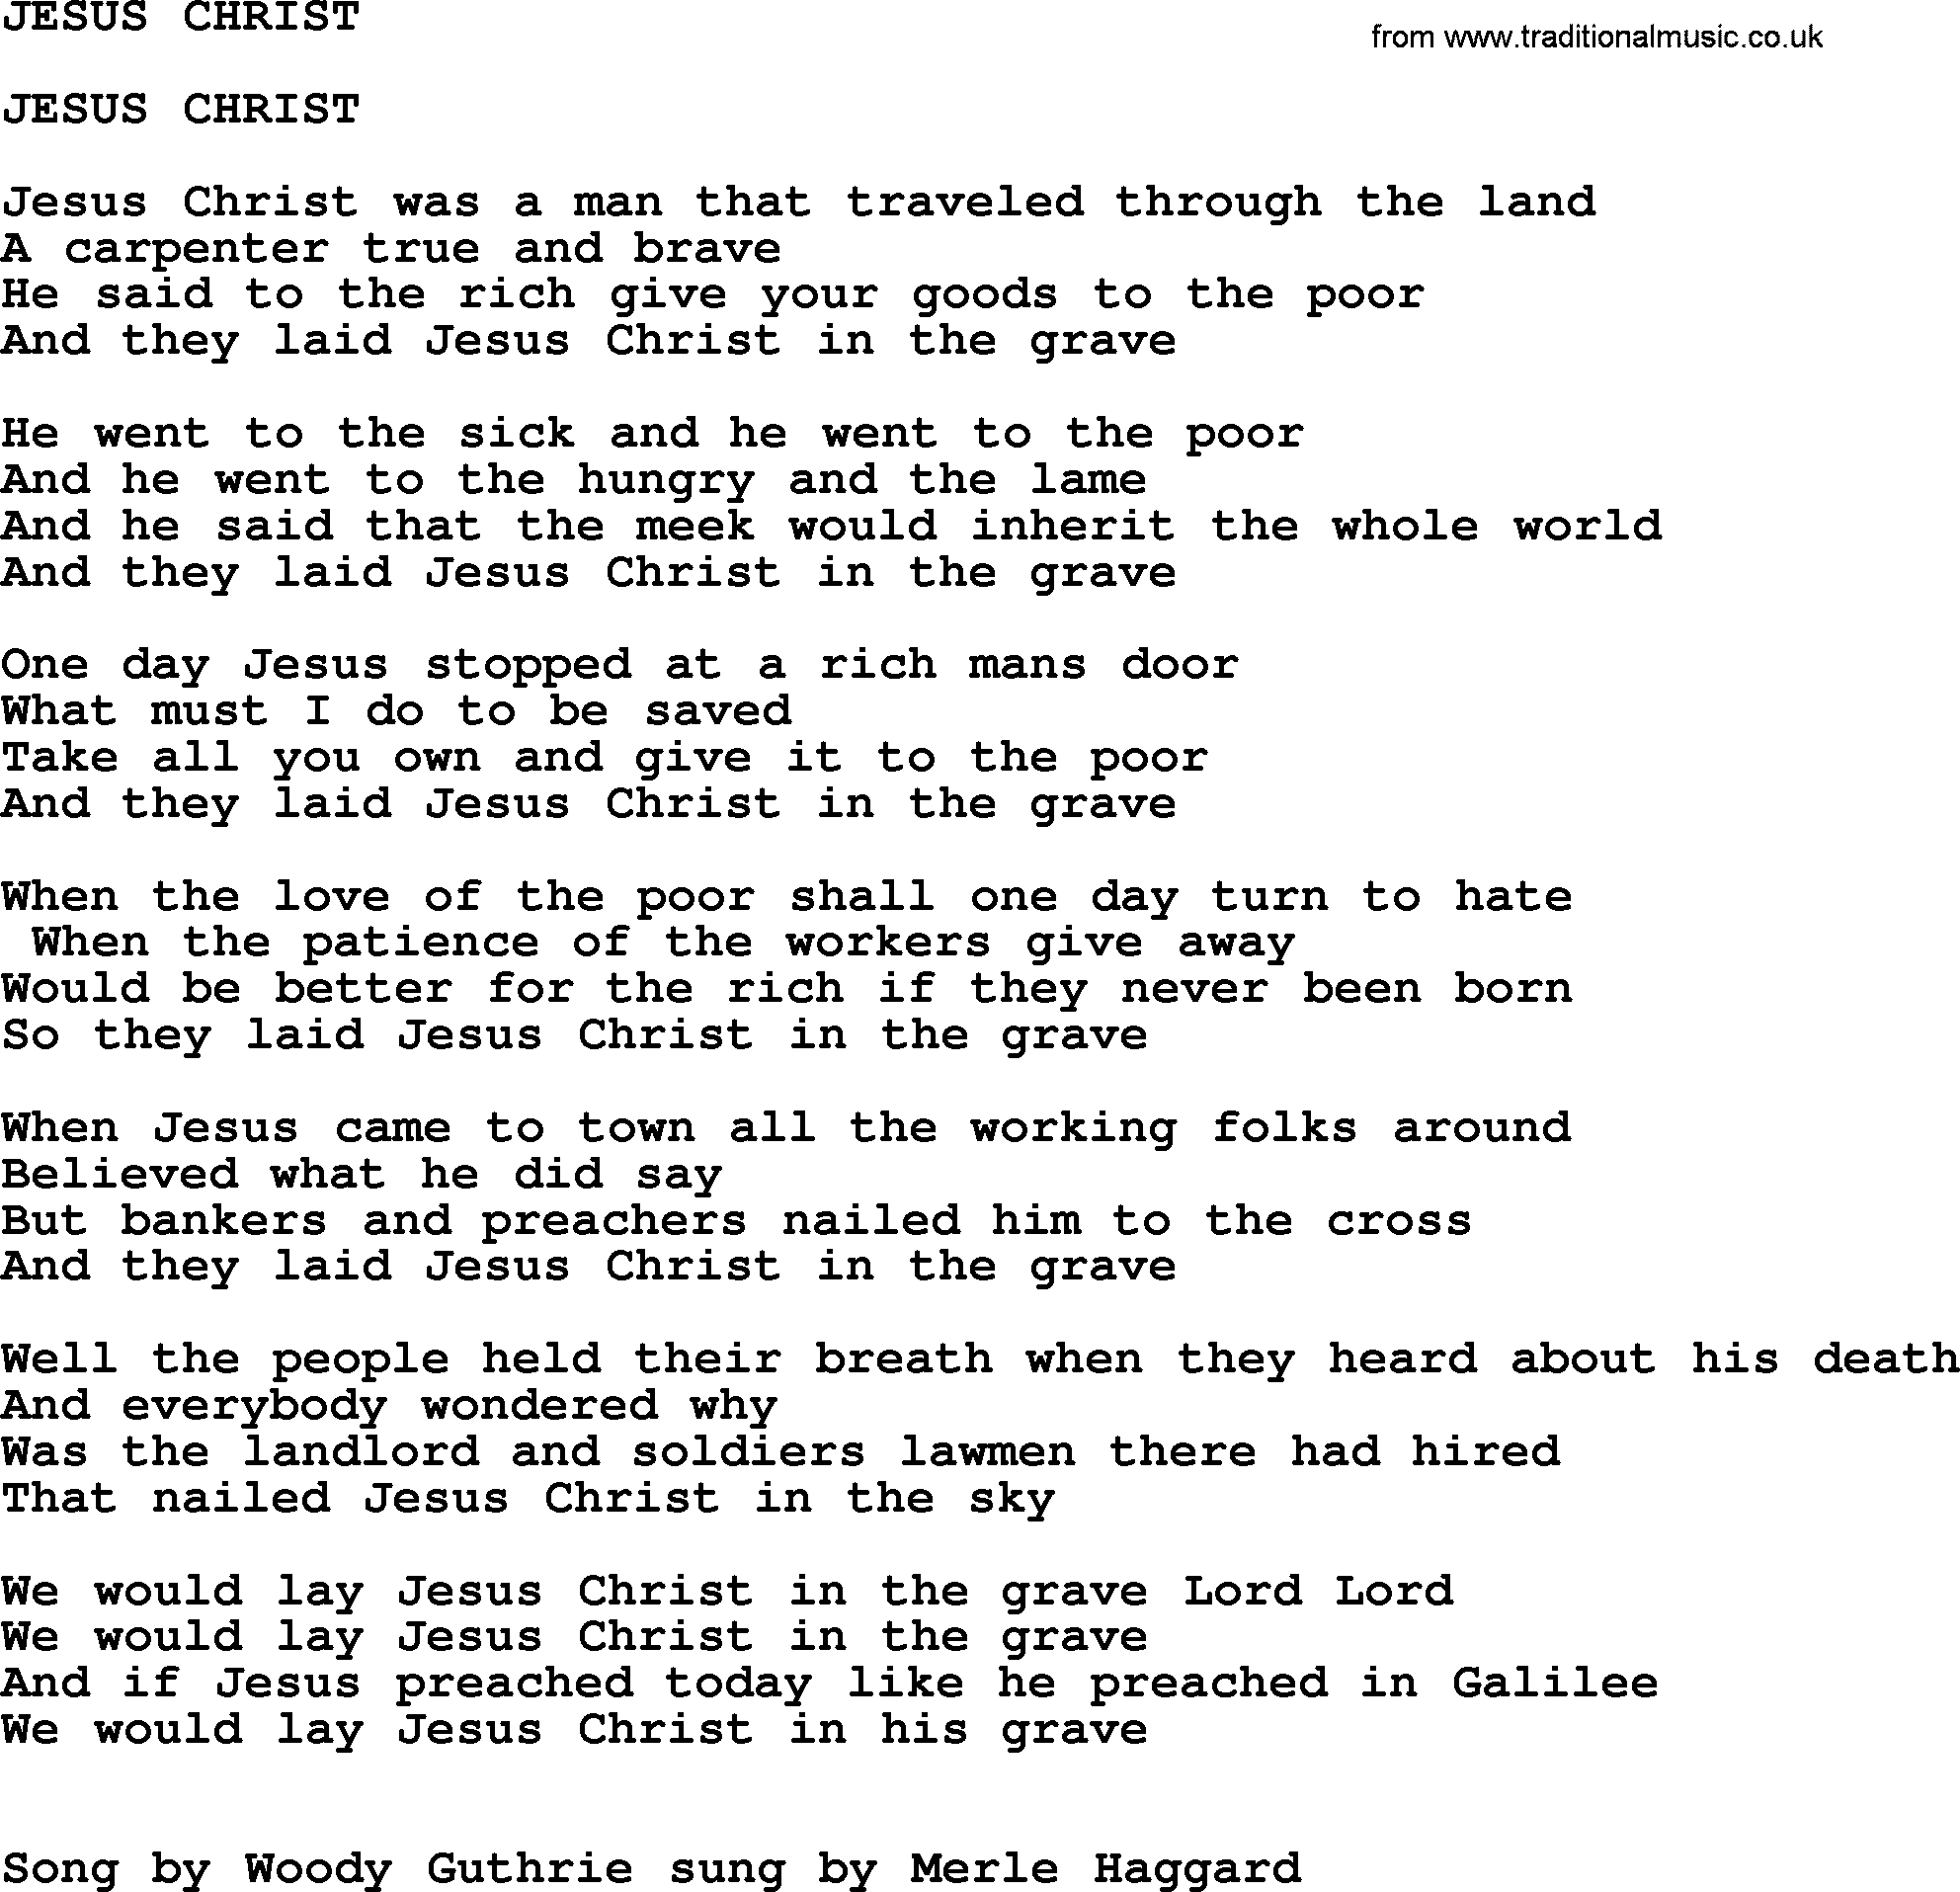 Merle Haggard song: Jesus Christ, lyrics.